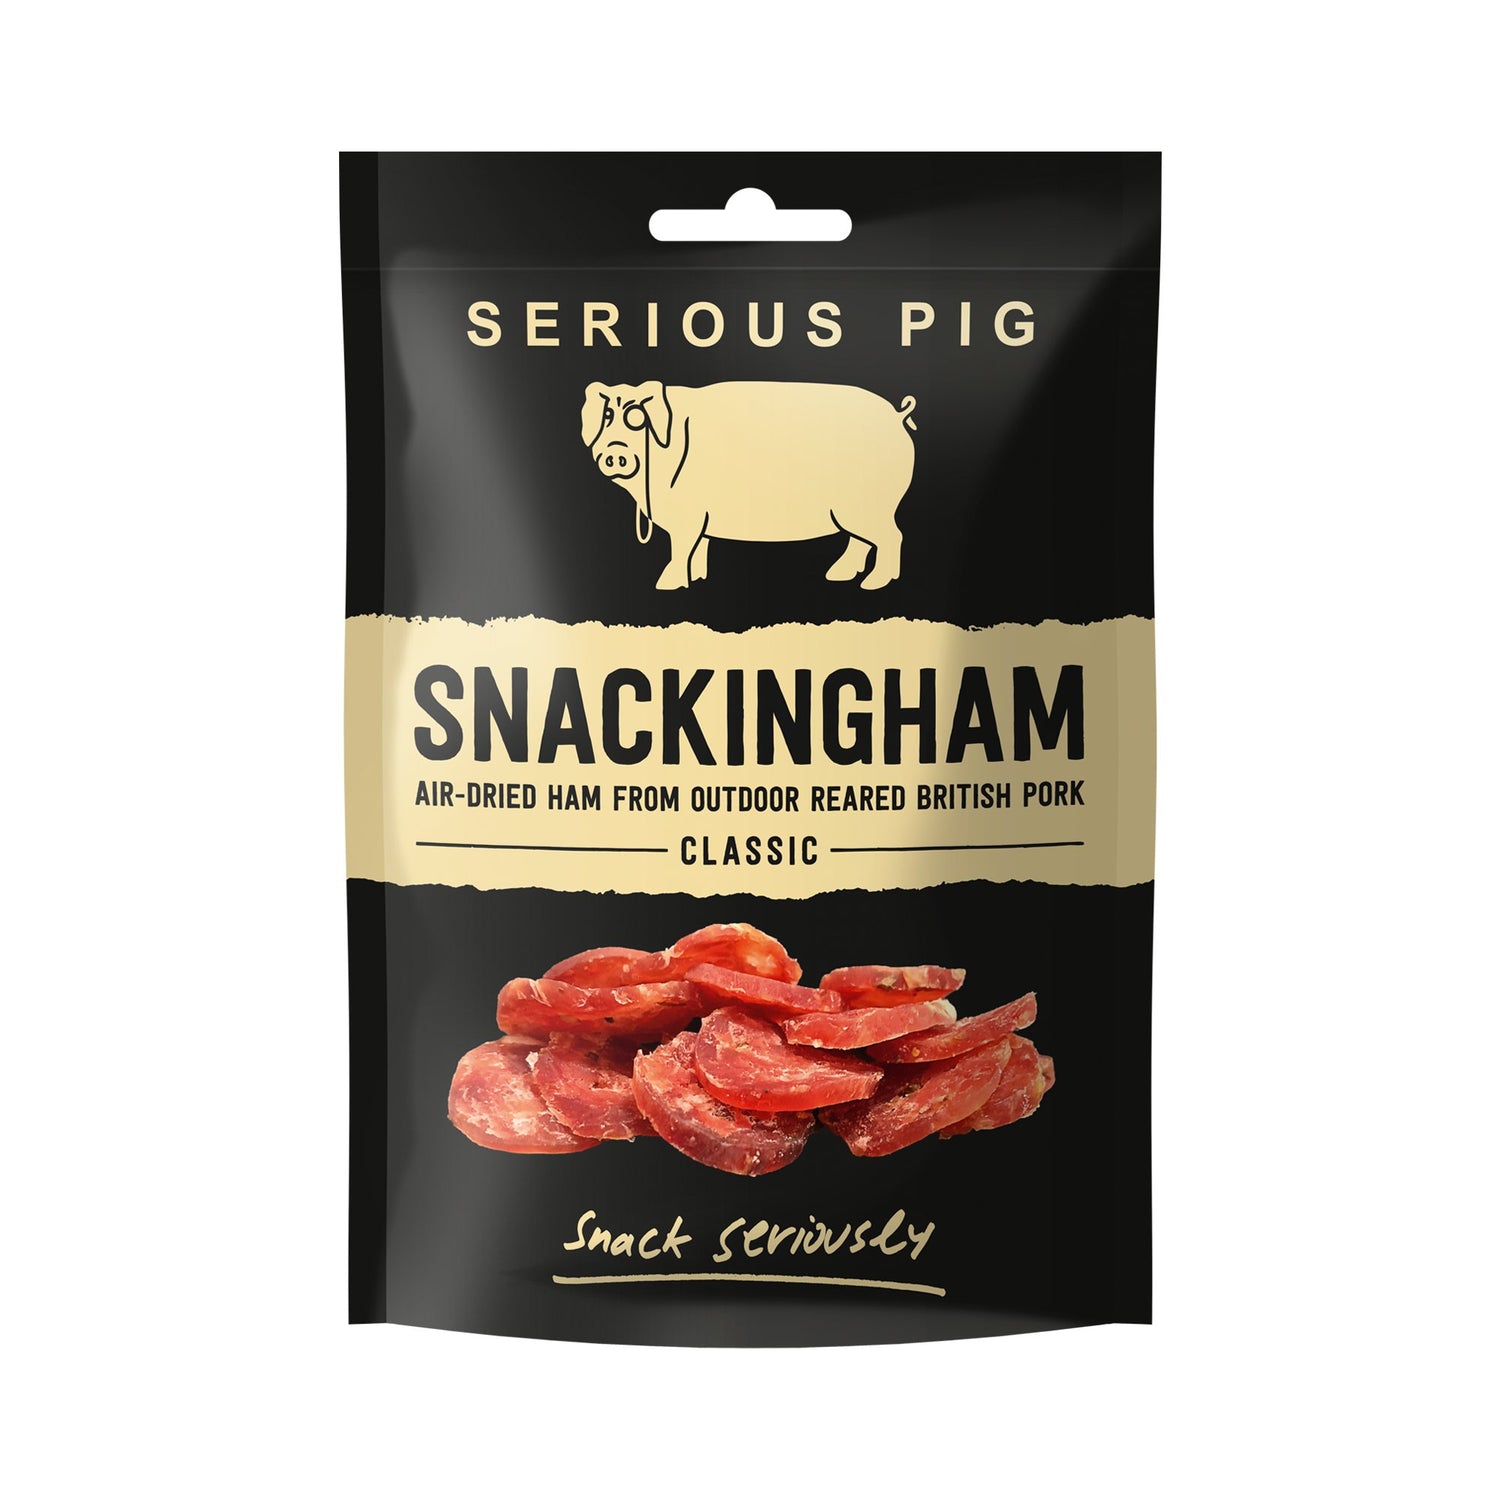 Serious Pig Snackingham - Keto amigable - theskinnyfoodco